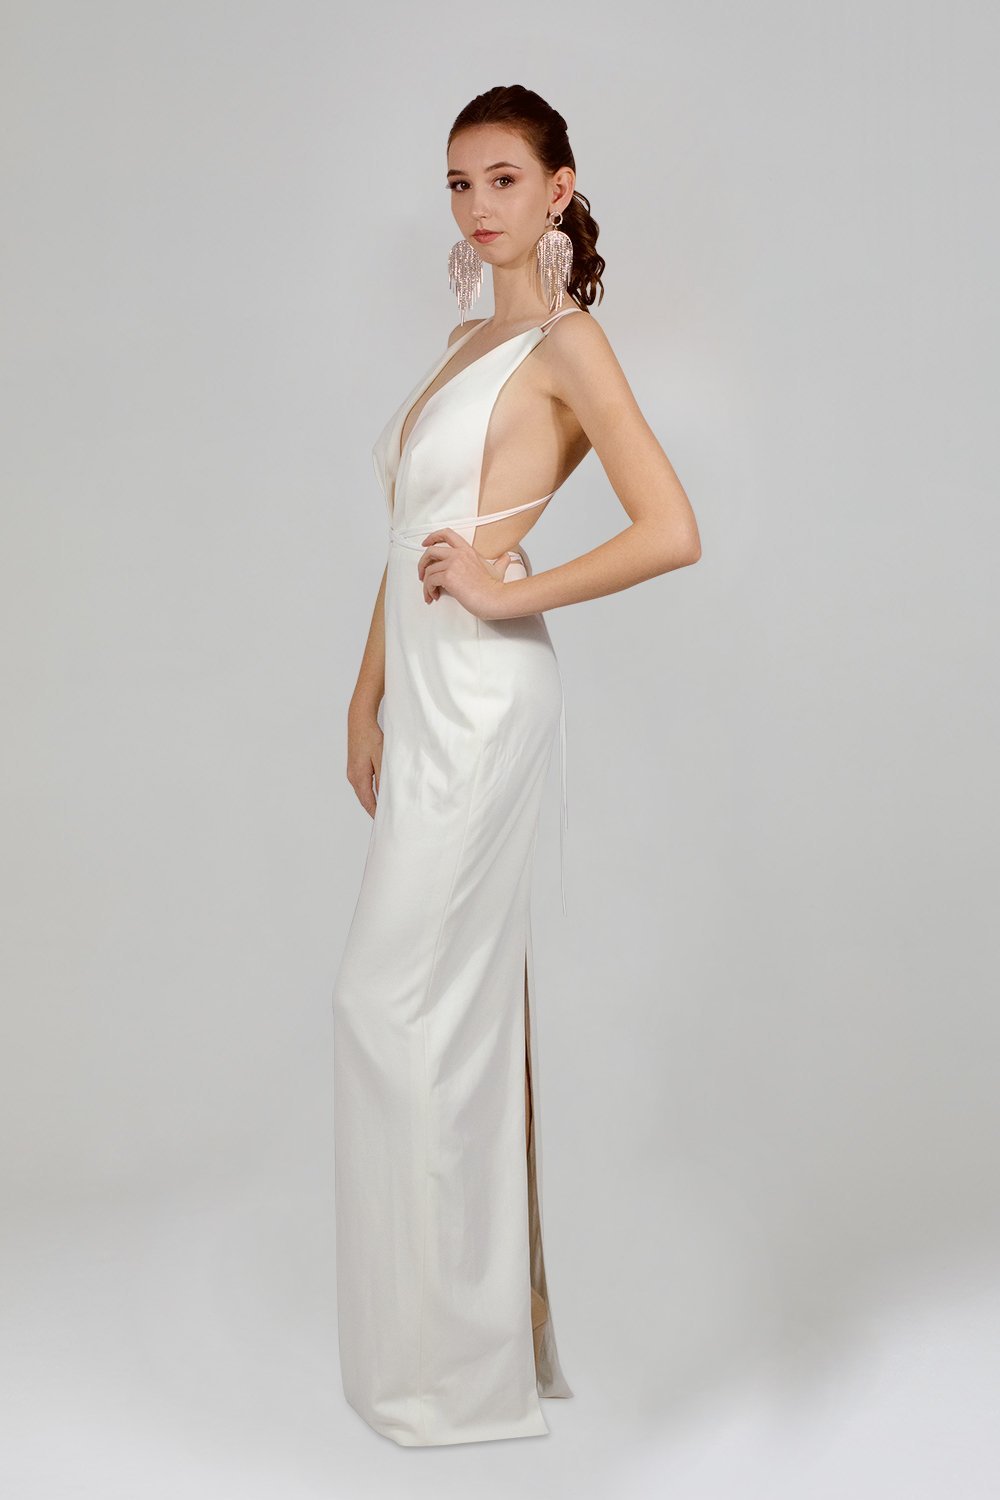 custom made white evening formal bridesmaid dresses perth australia envious bridal & formal